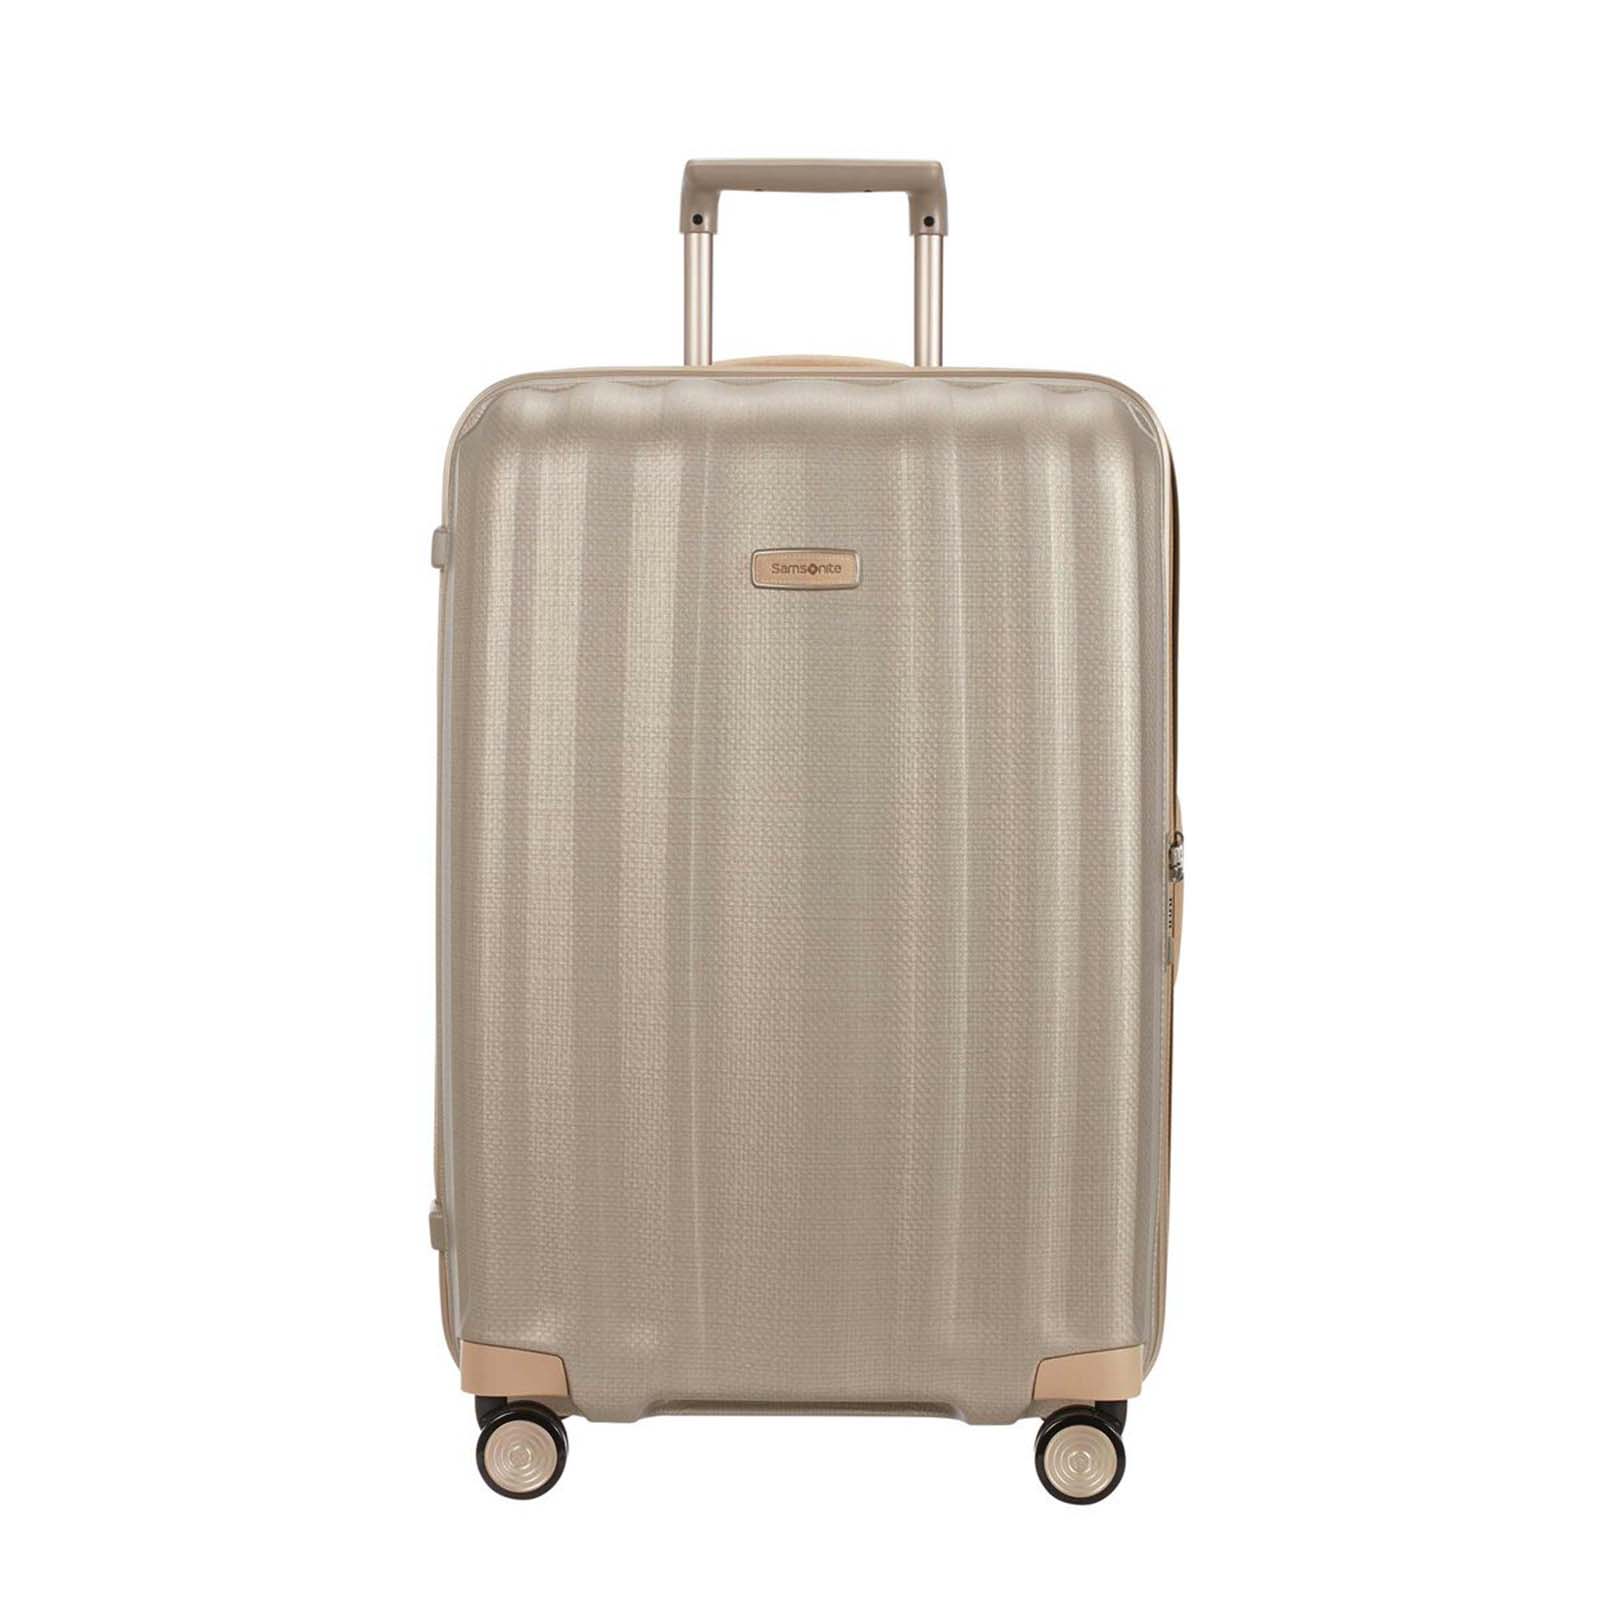 Samsonite-Lite-Cube-Prime-76cm-Suitcase-Ivory-Gold-Front